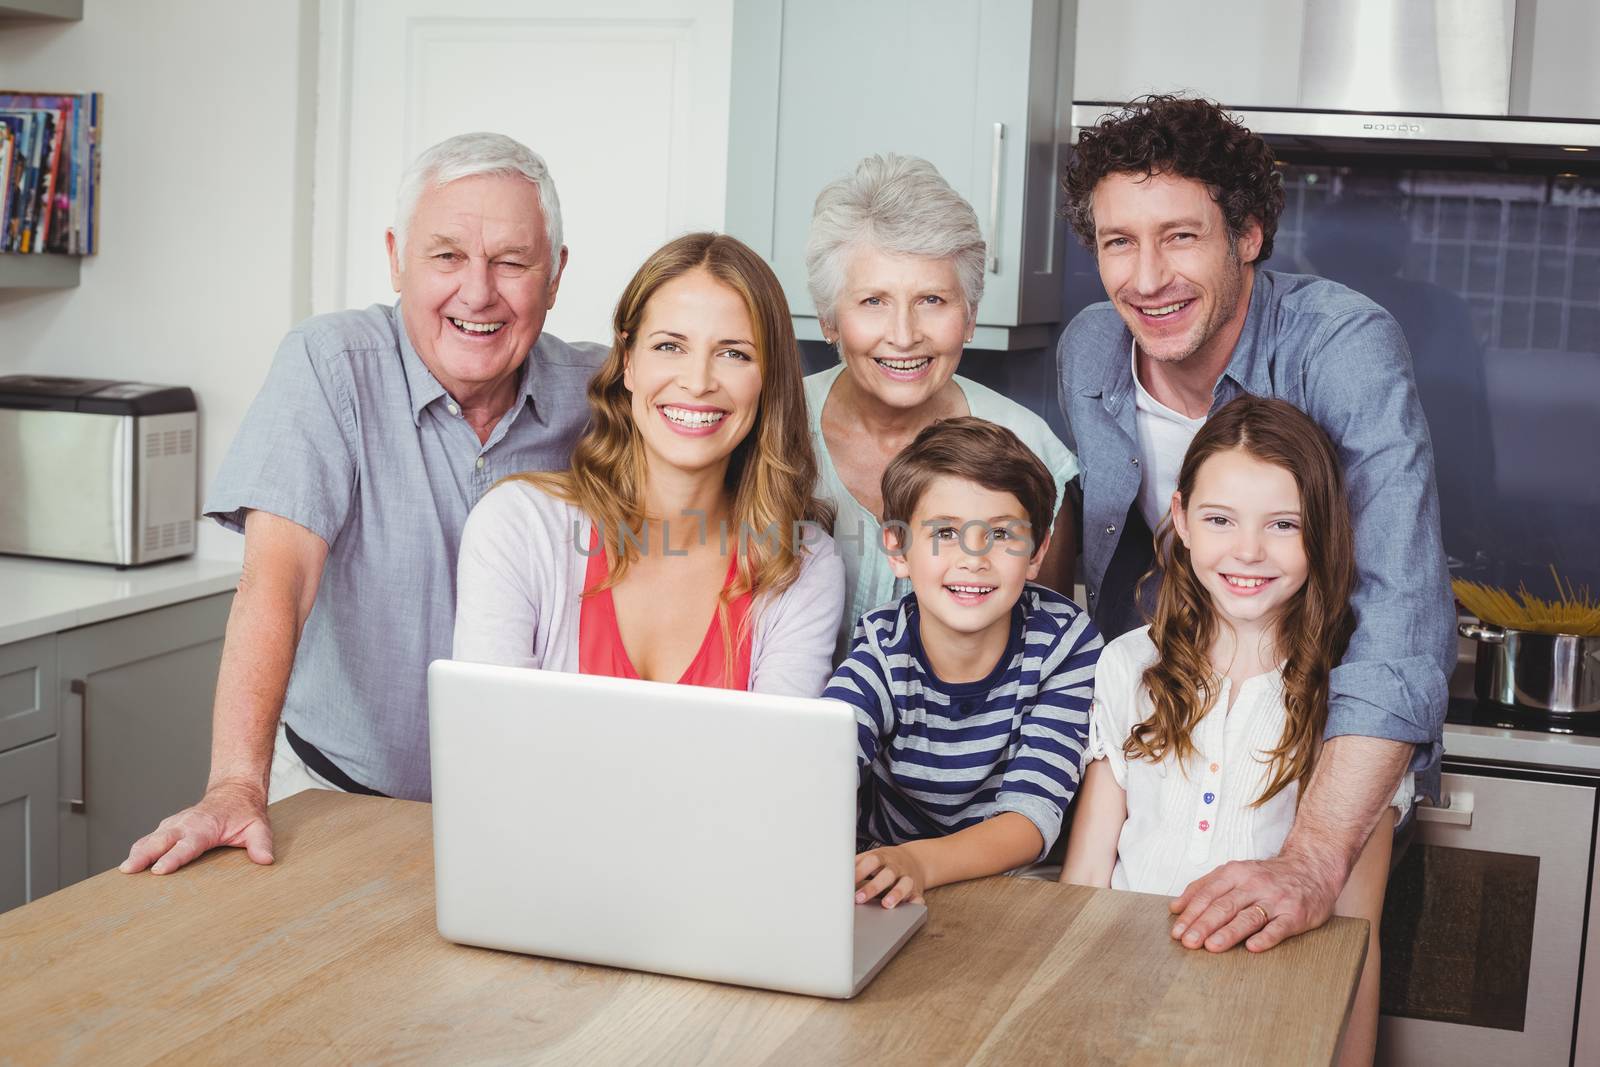 Portrait of happy family using laptop in kitchen by Wavebreakmedia